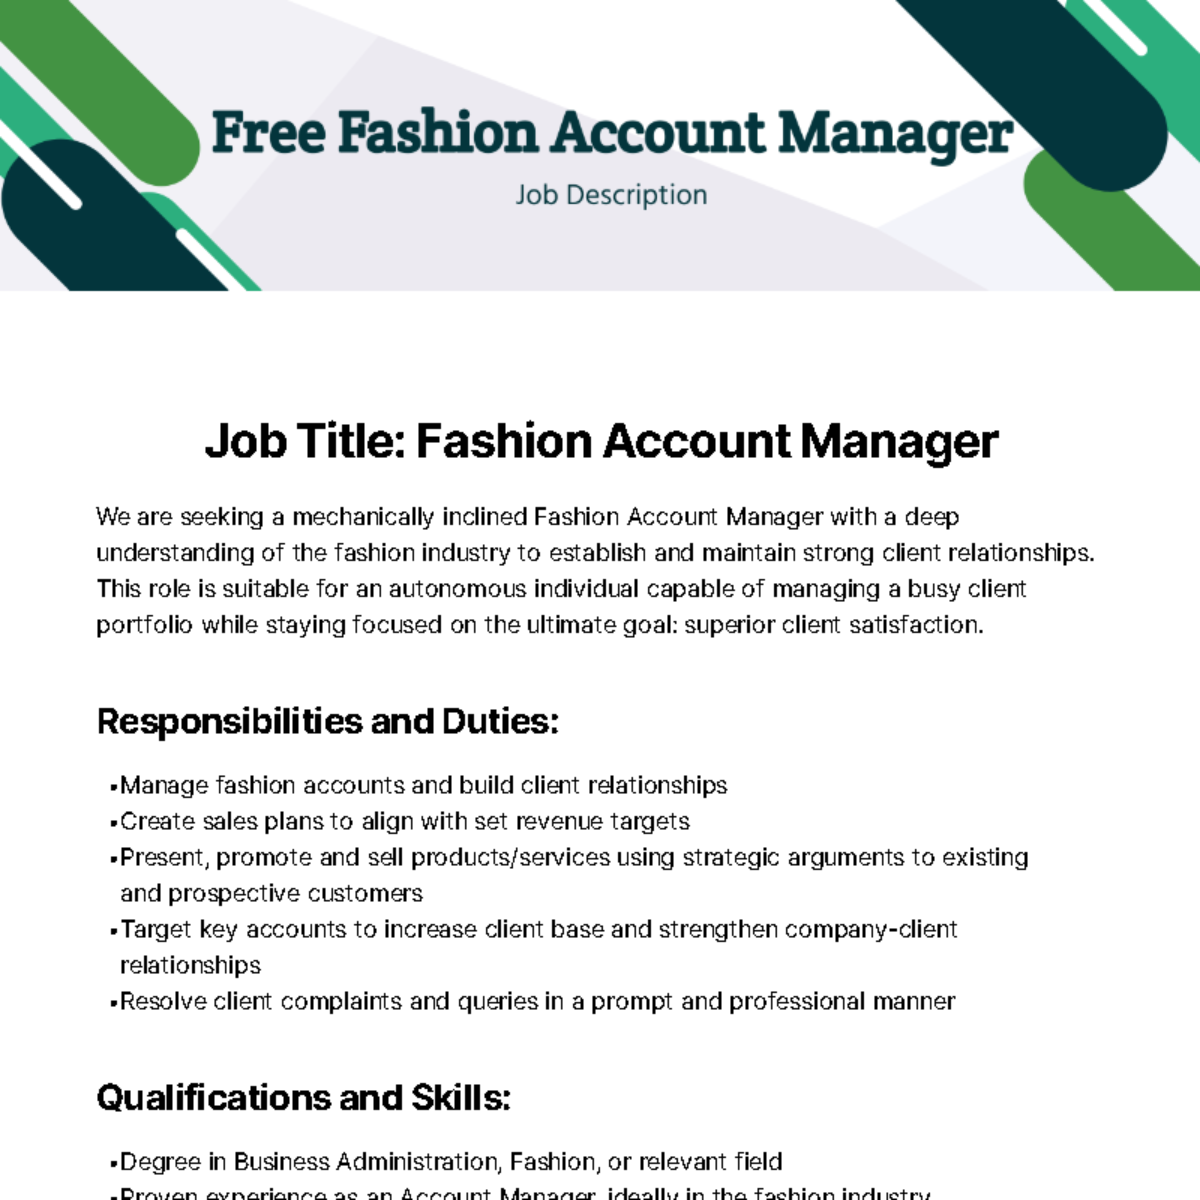 Free Fashion Account Manager Job Description Template